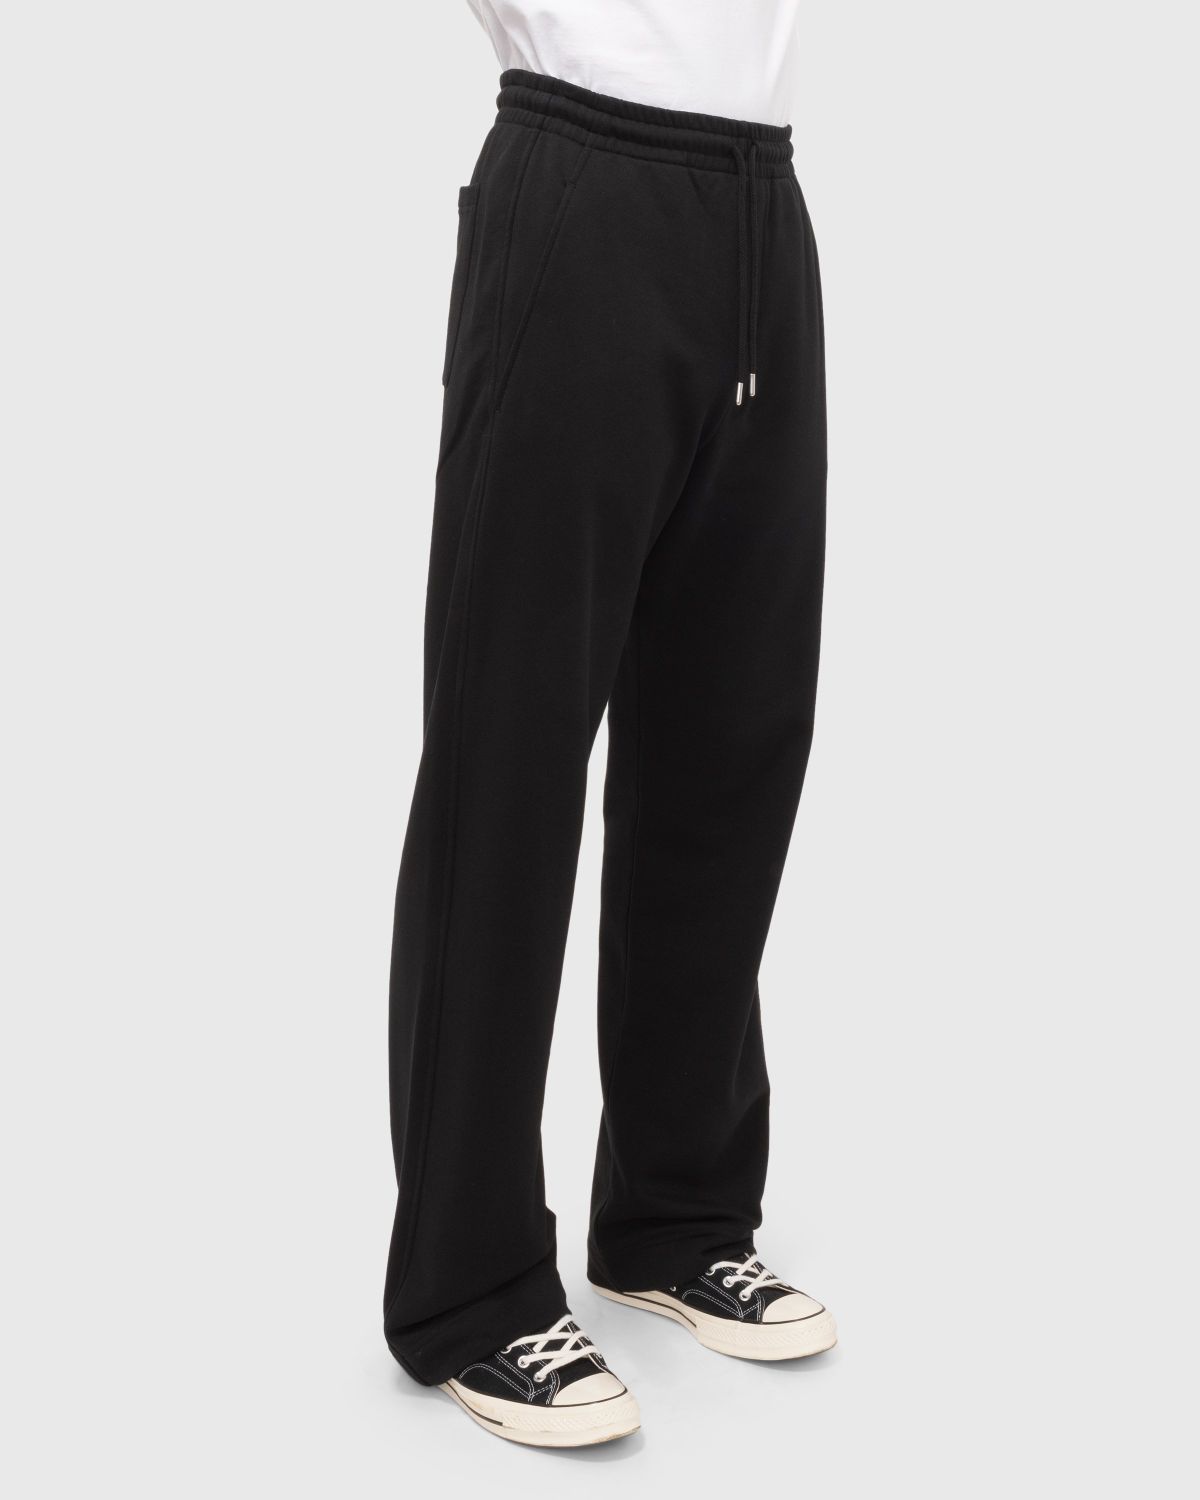 Dries van Noten – Hamer Sweatpants Black - Pants - Black - Image 3